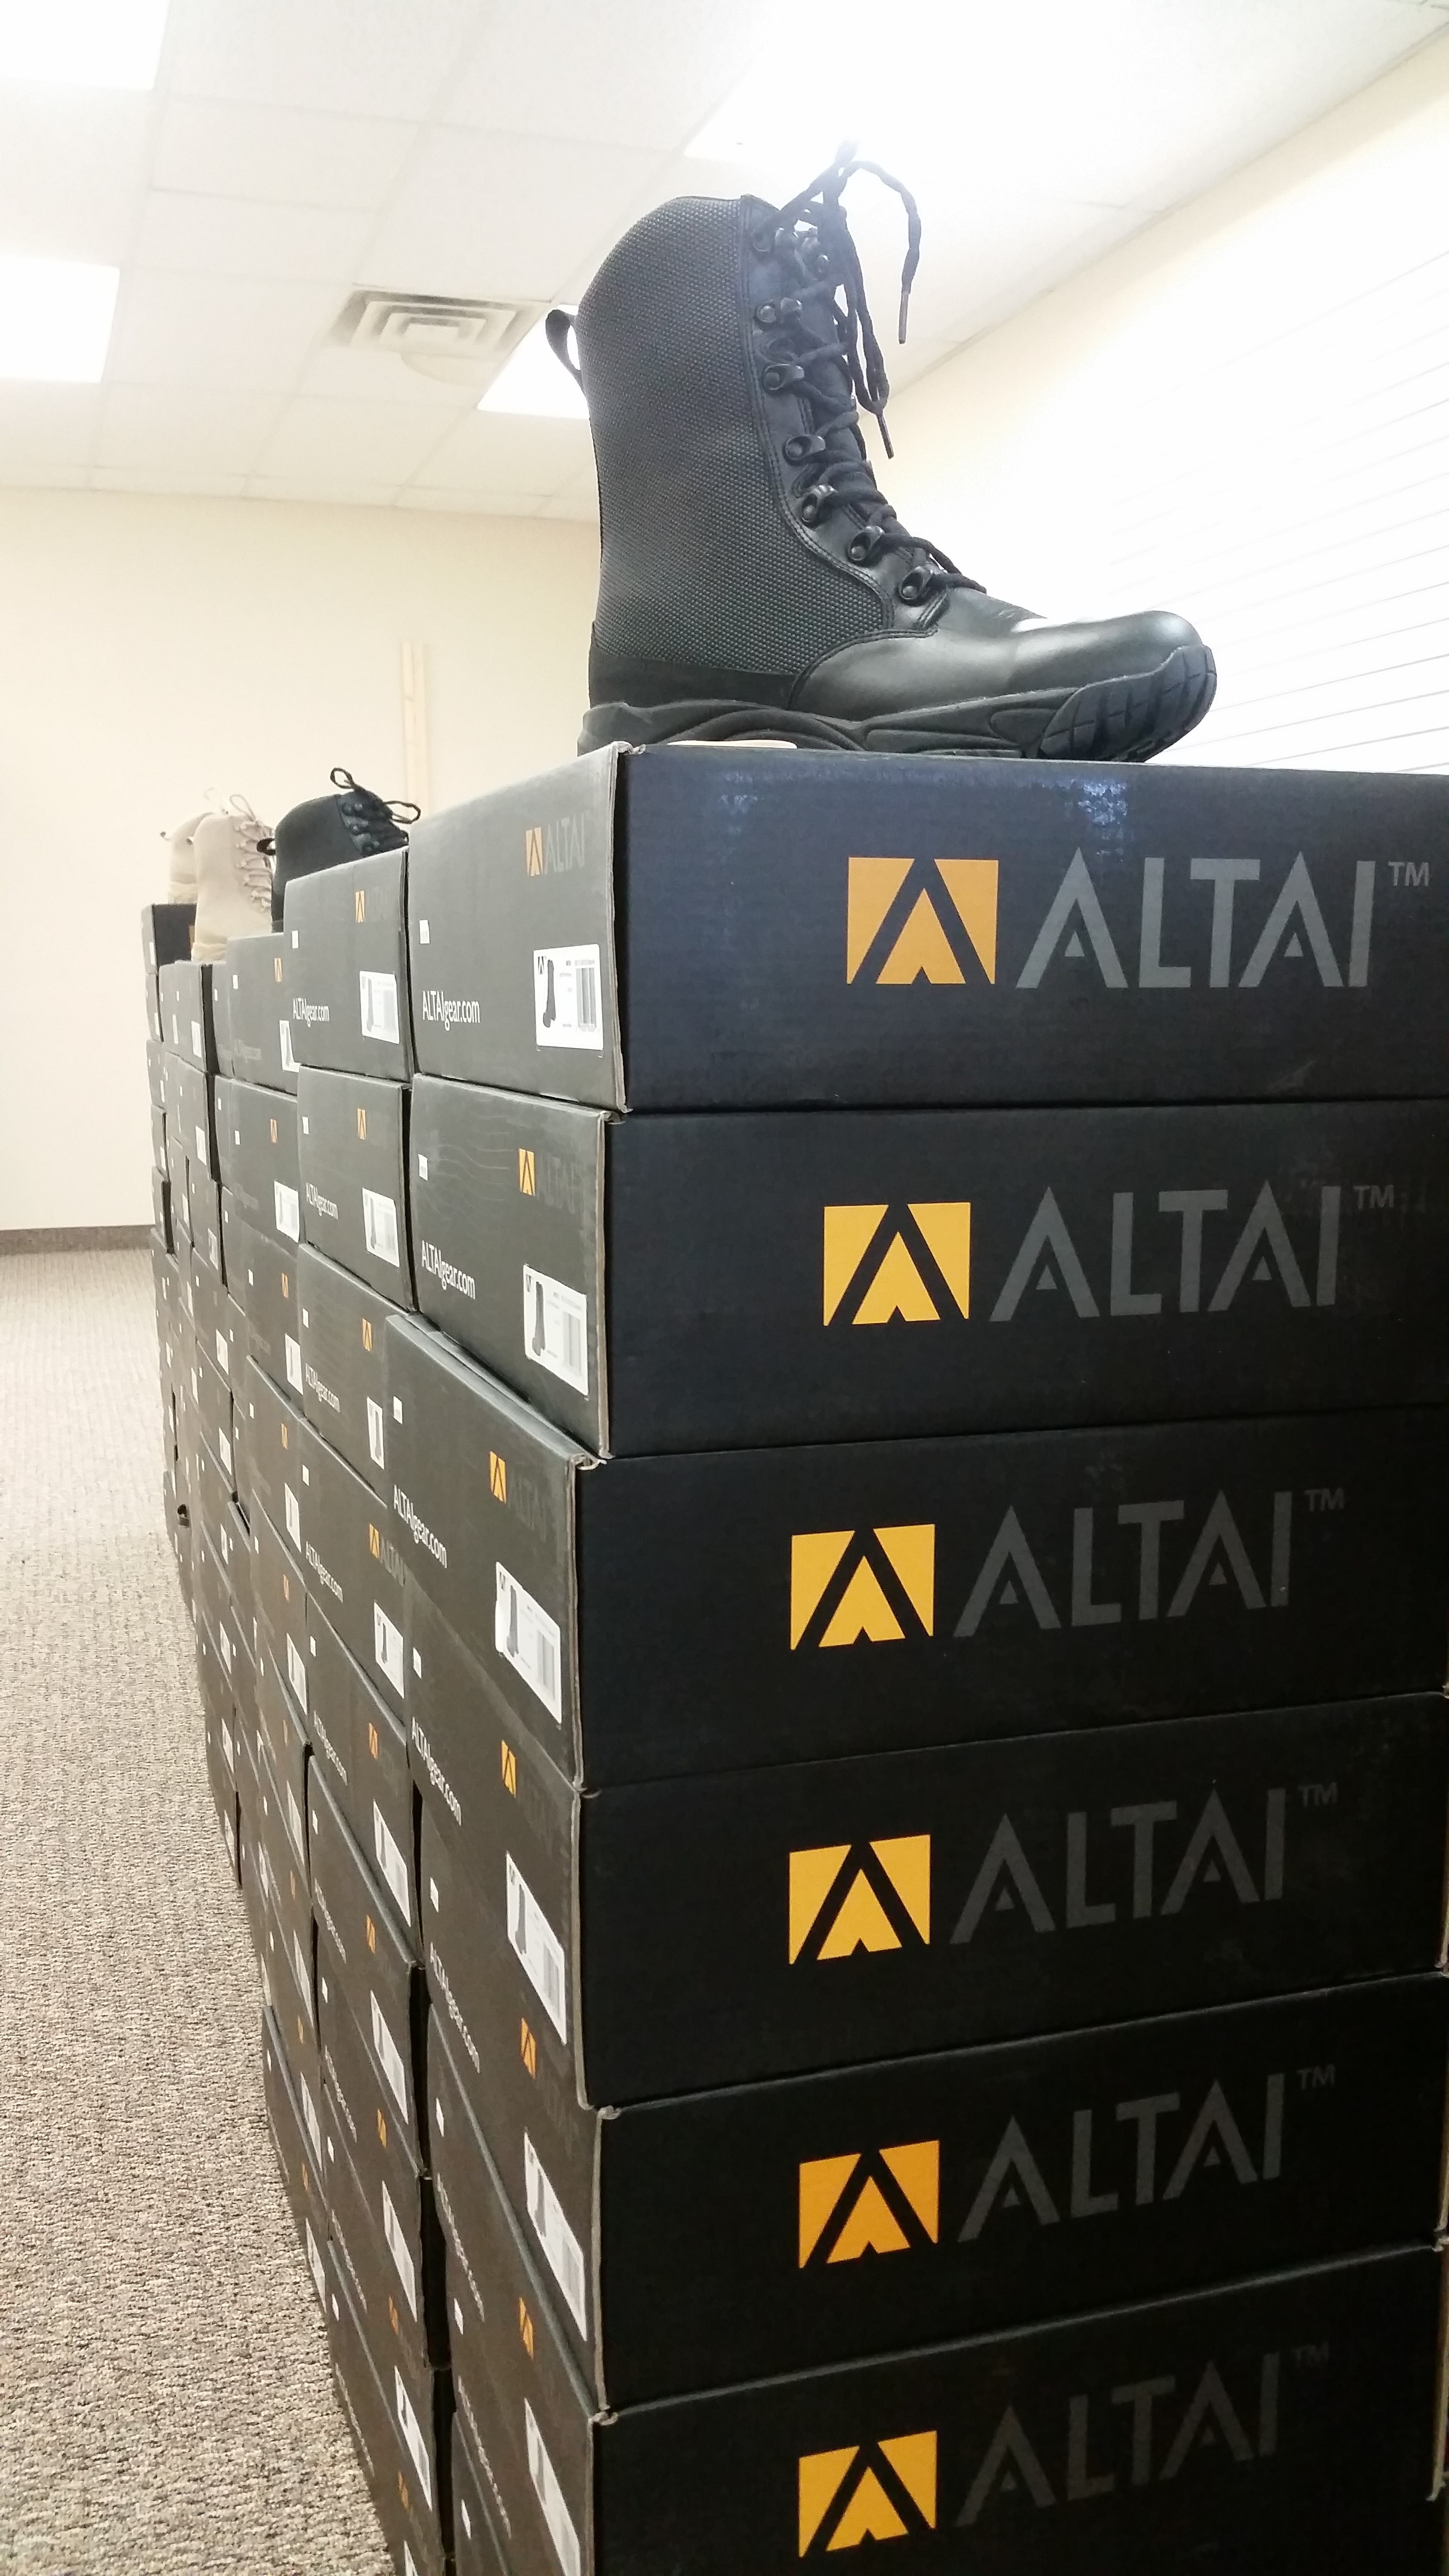 ALTAI Tactical Boot Retailers